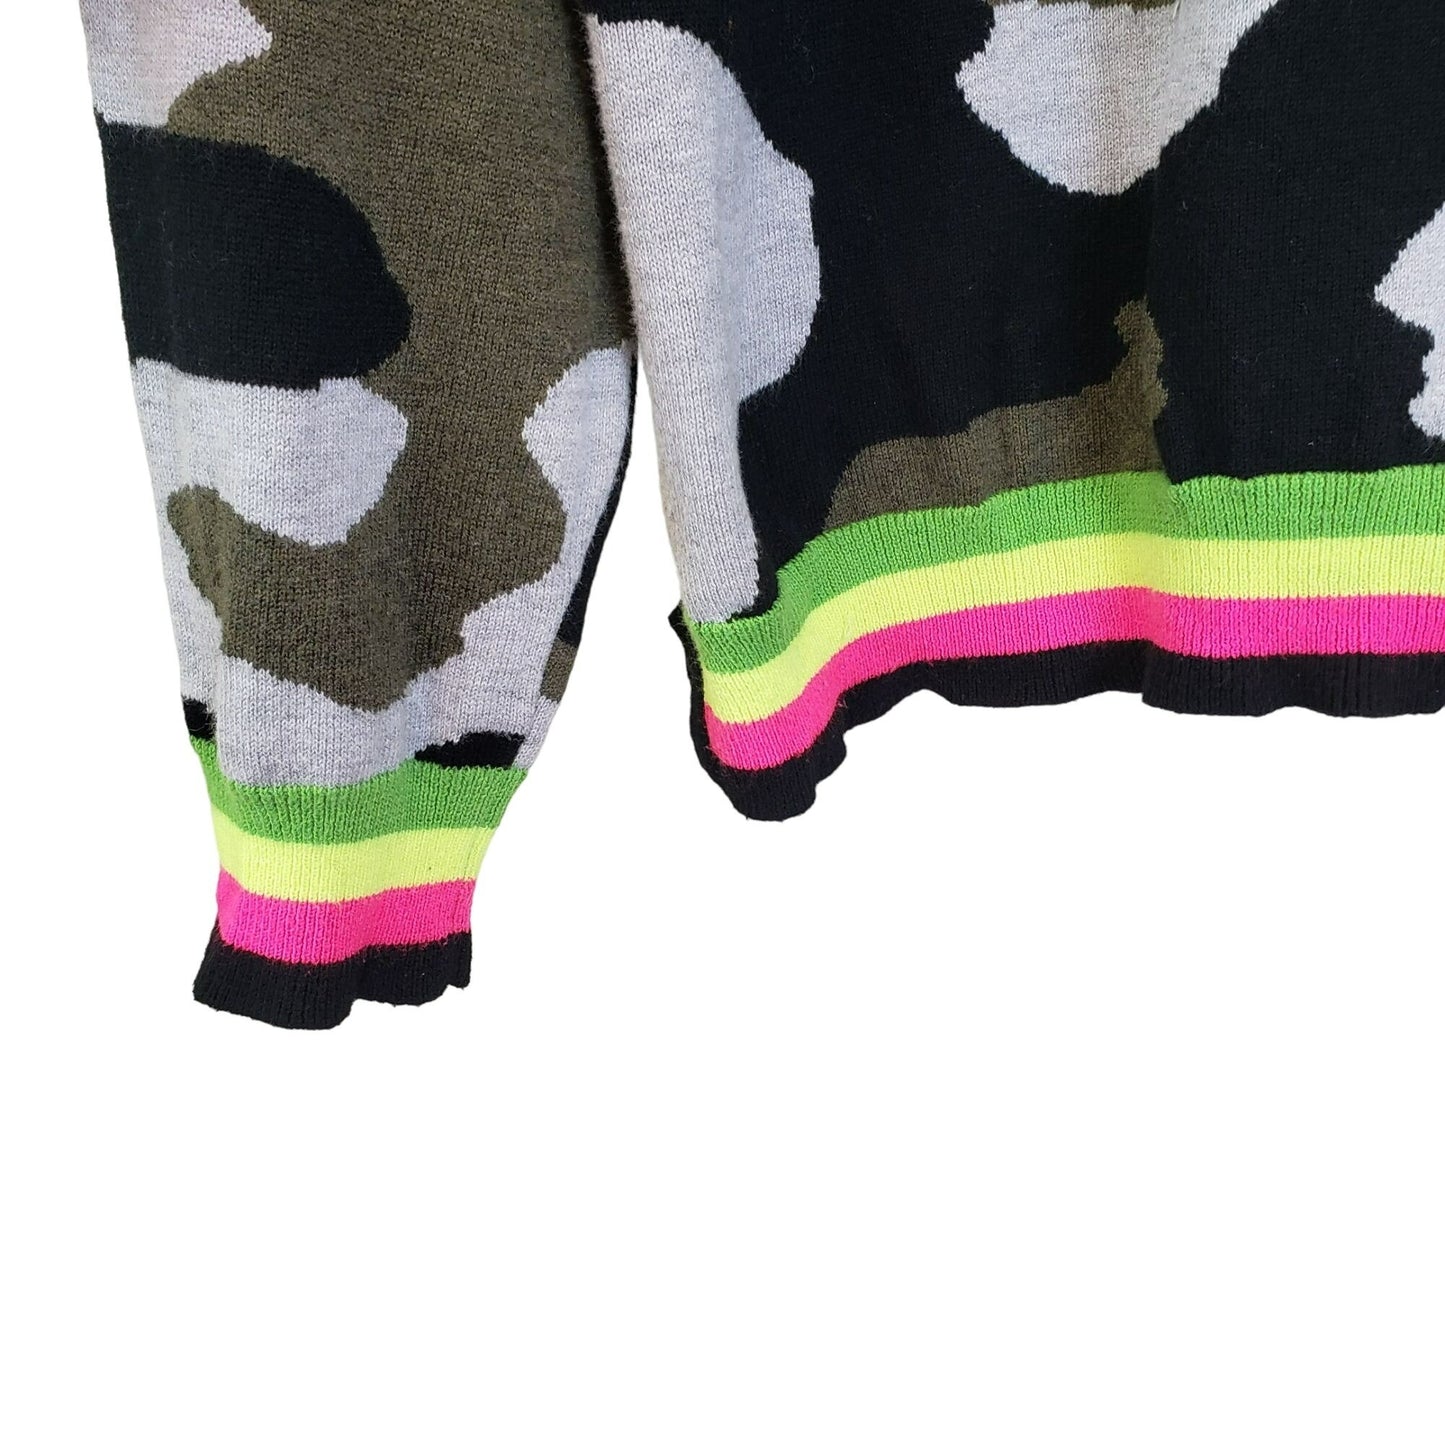 Petyon Jensen Silk Blend Camouflage and Neon Stripe Sweater Size XL